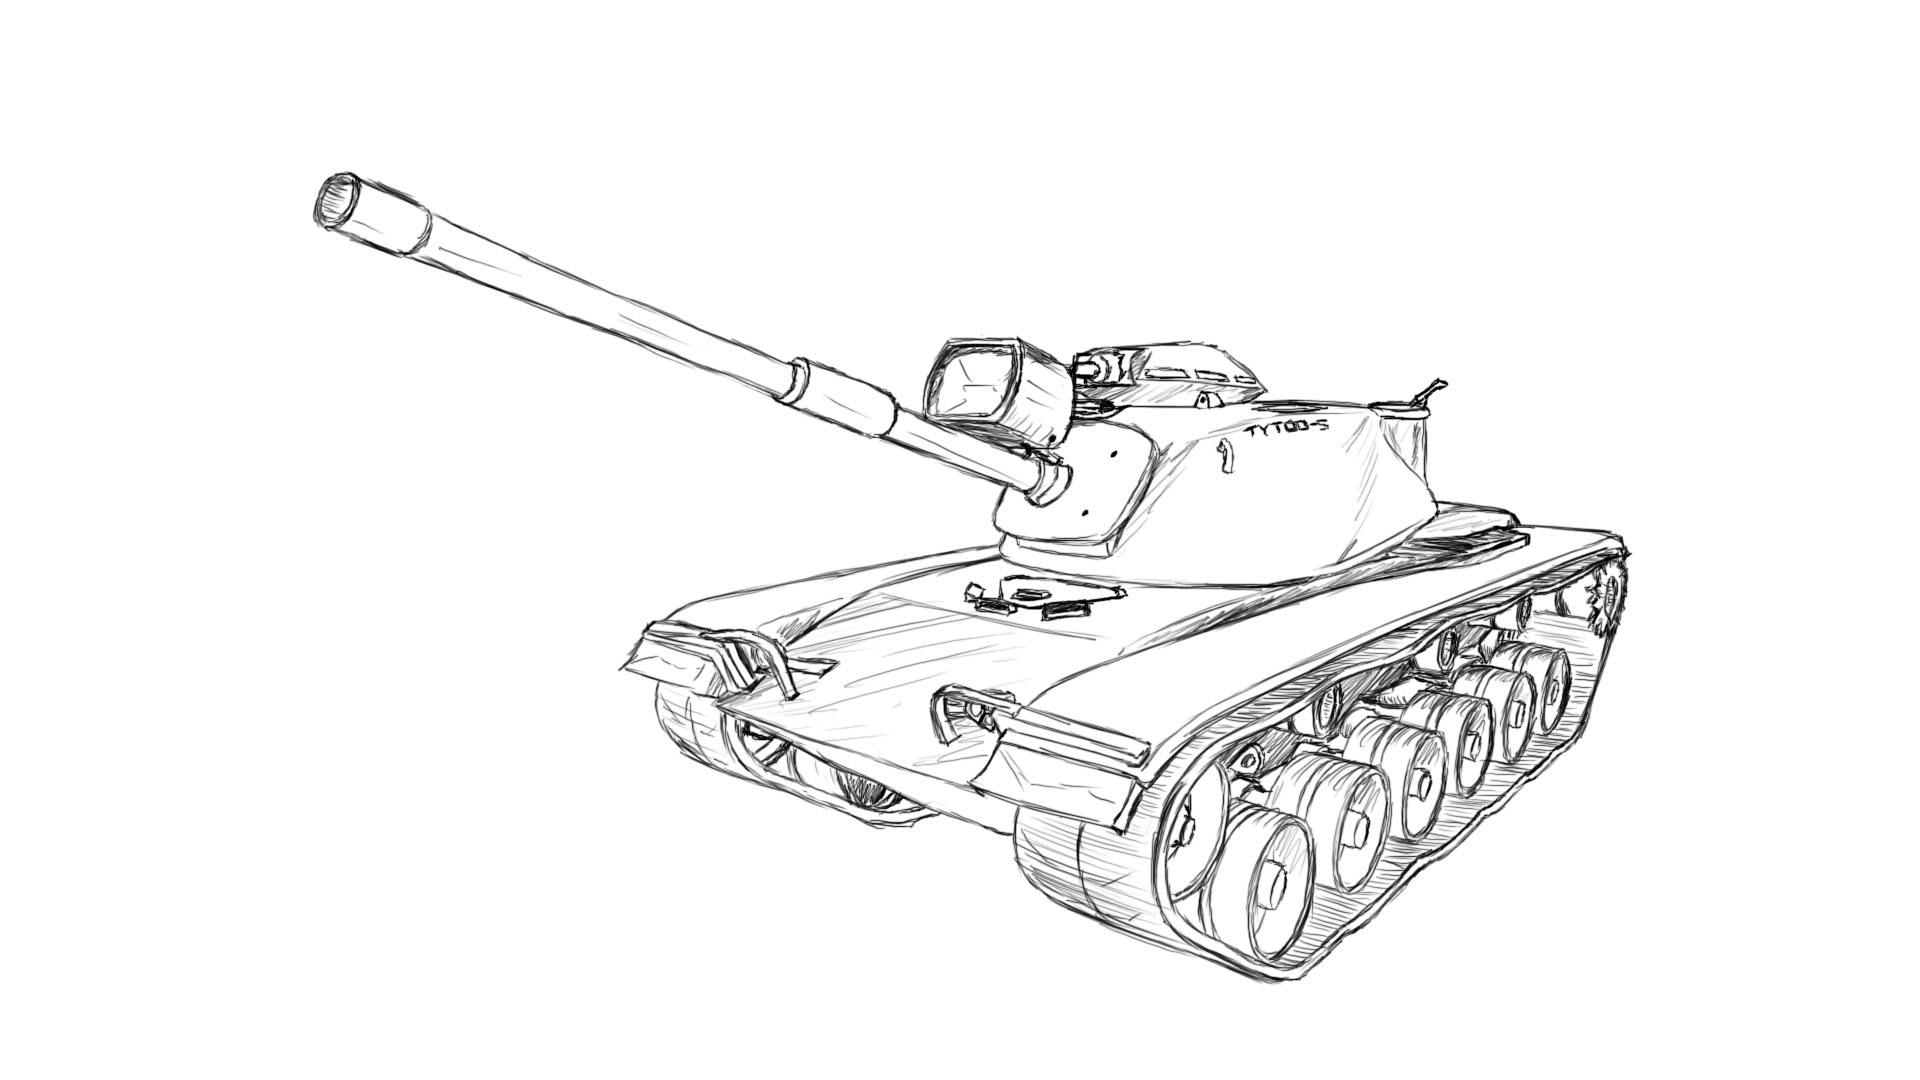 Танк т-34 рисунок